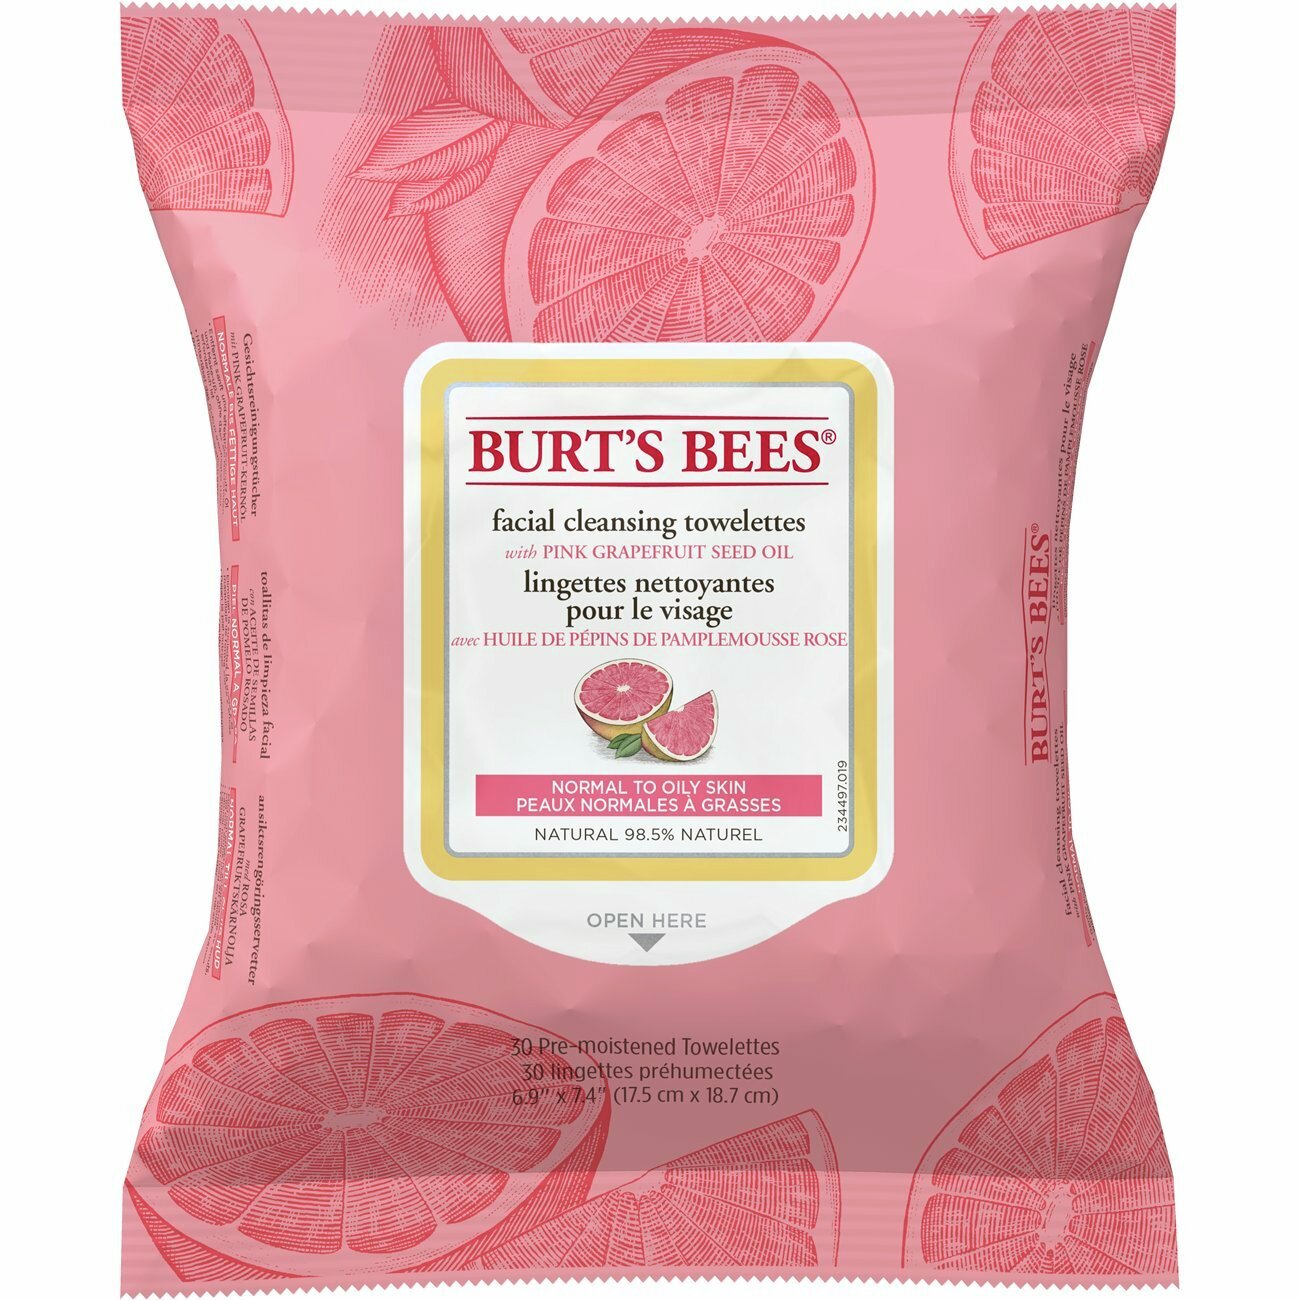 Burt's Bees Pink Grapefruit Facial Cleansing Wipes - 30pk